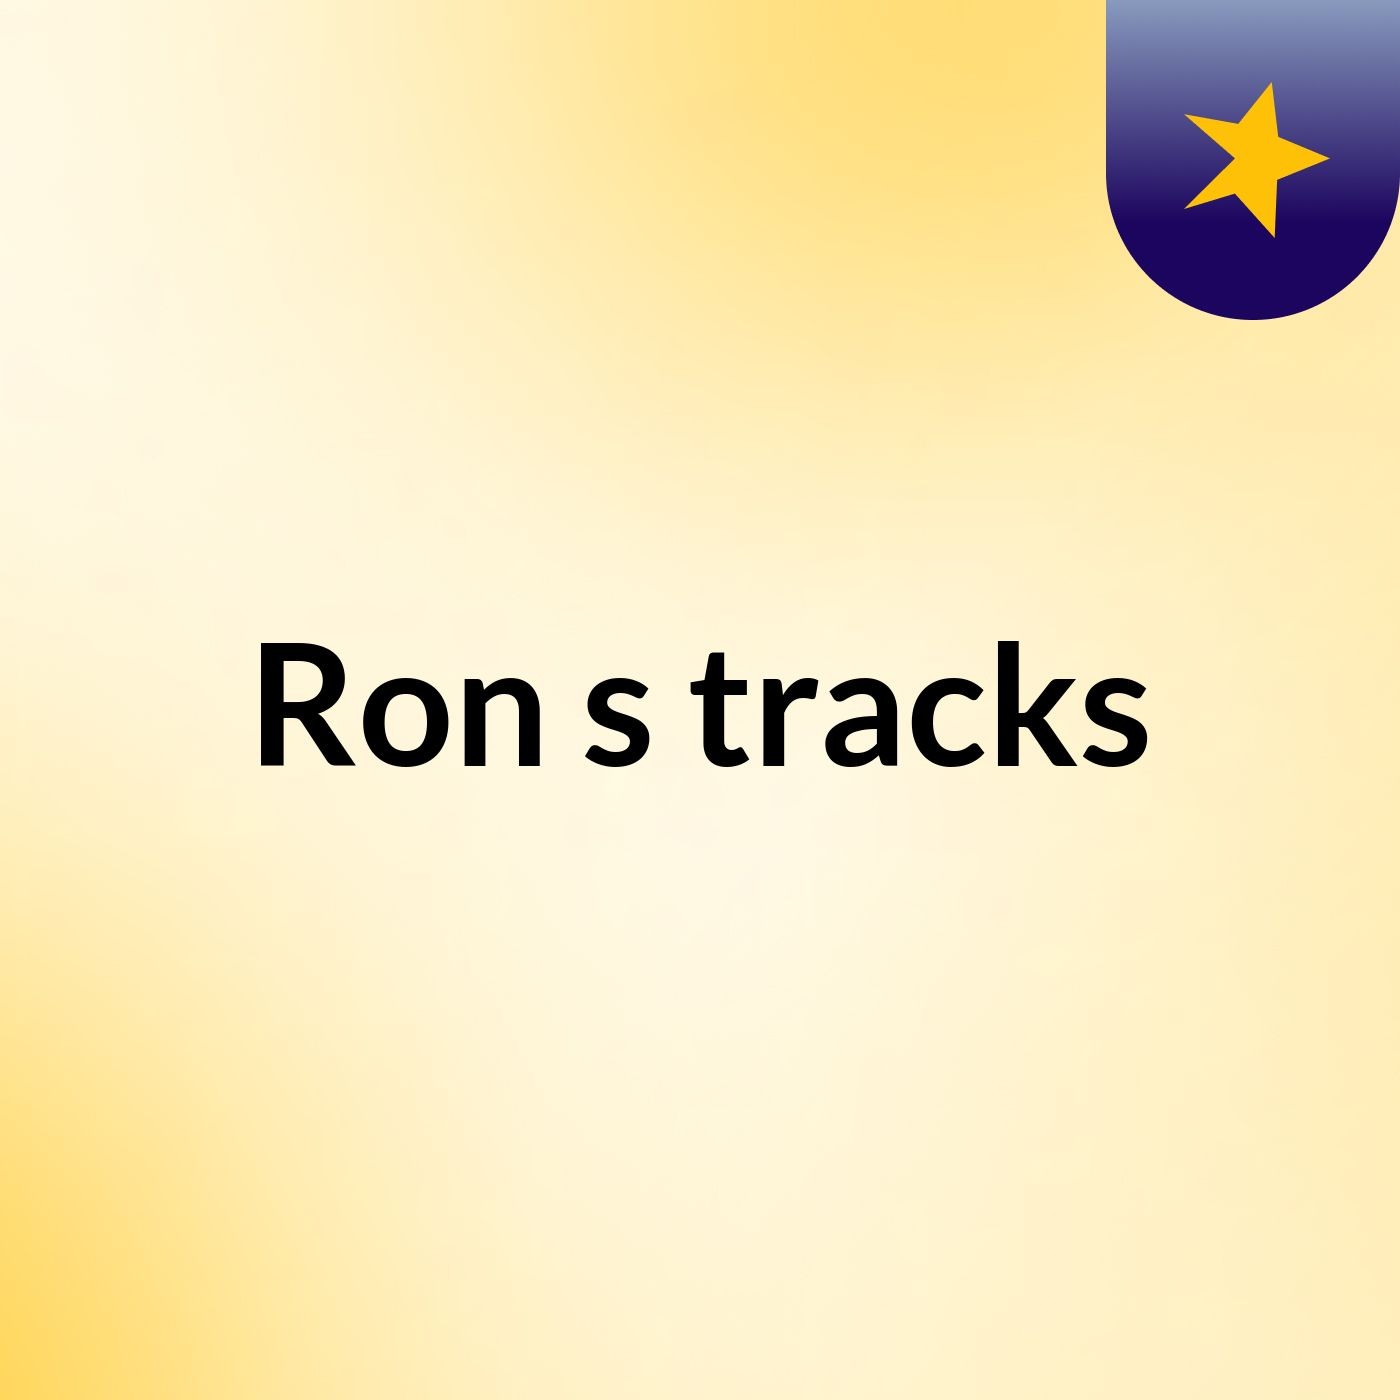 Ron's tracks